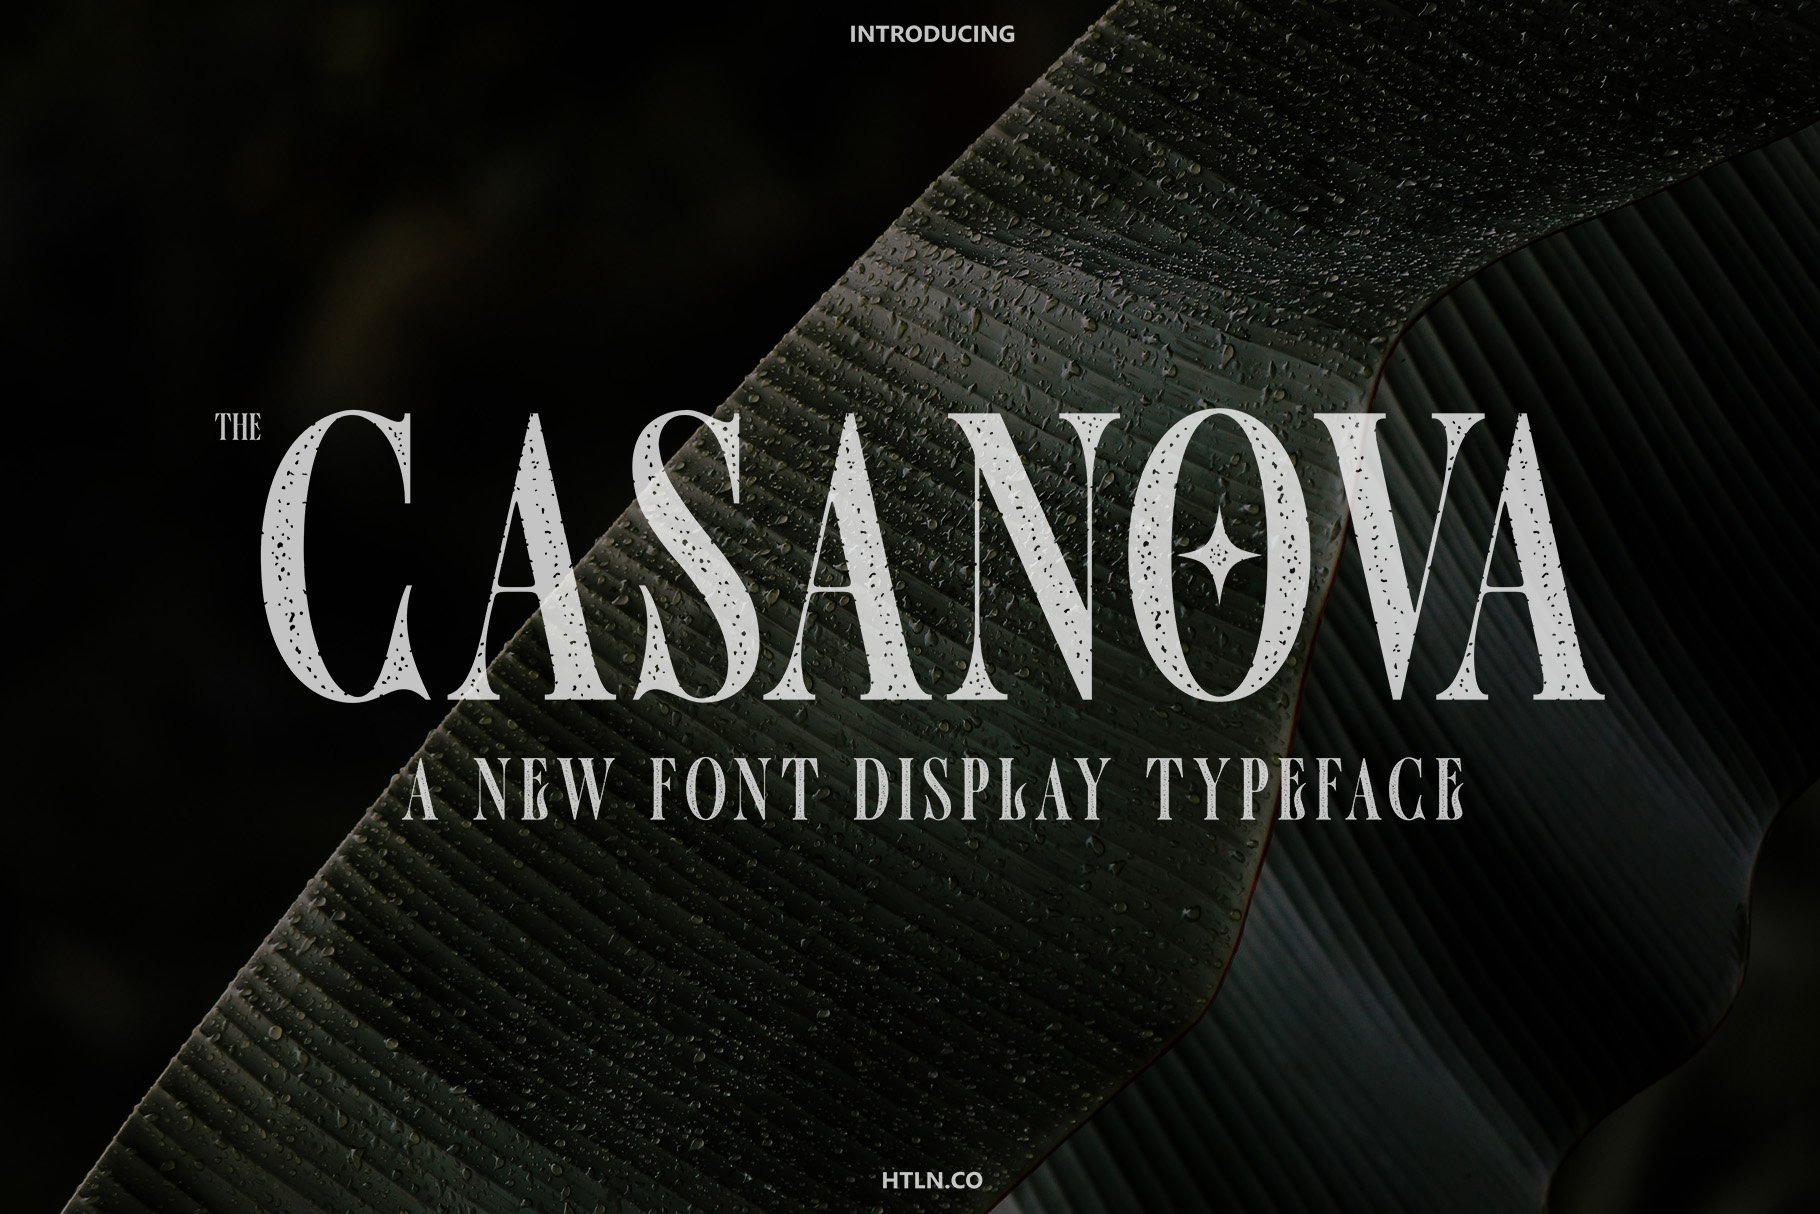 The Casanova (clean & rough) cover image.